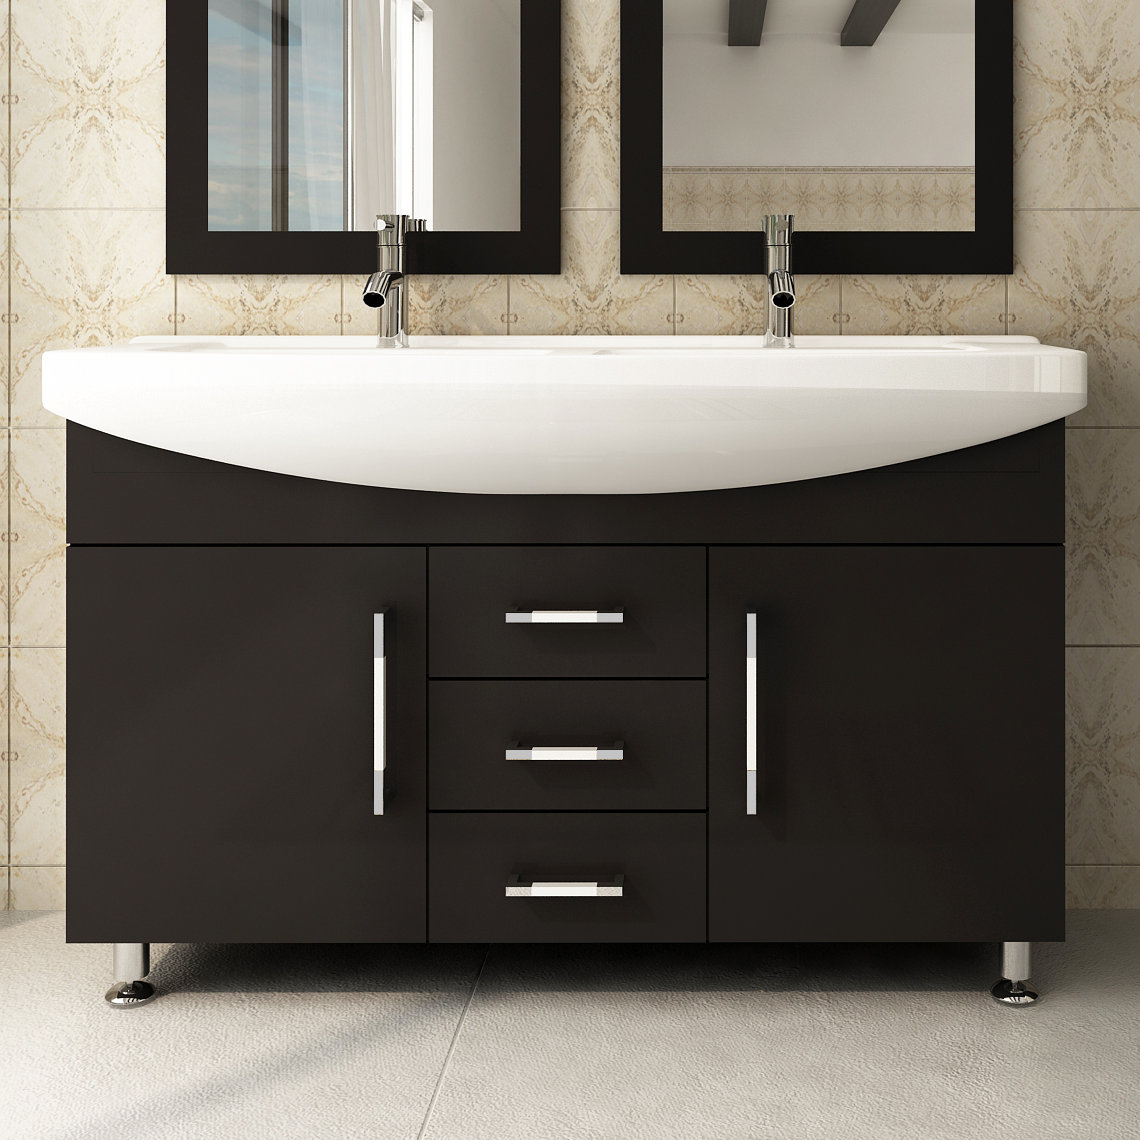 Double Trough Sink Vanity 48 Wayfair